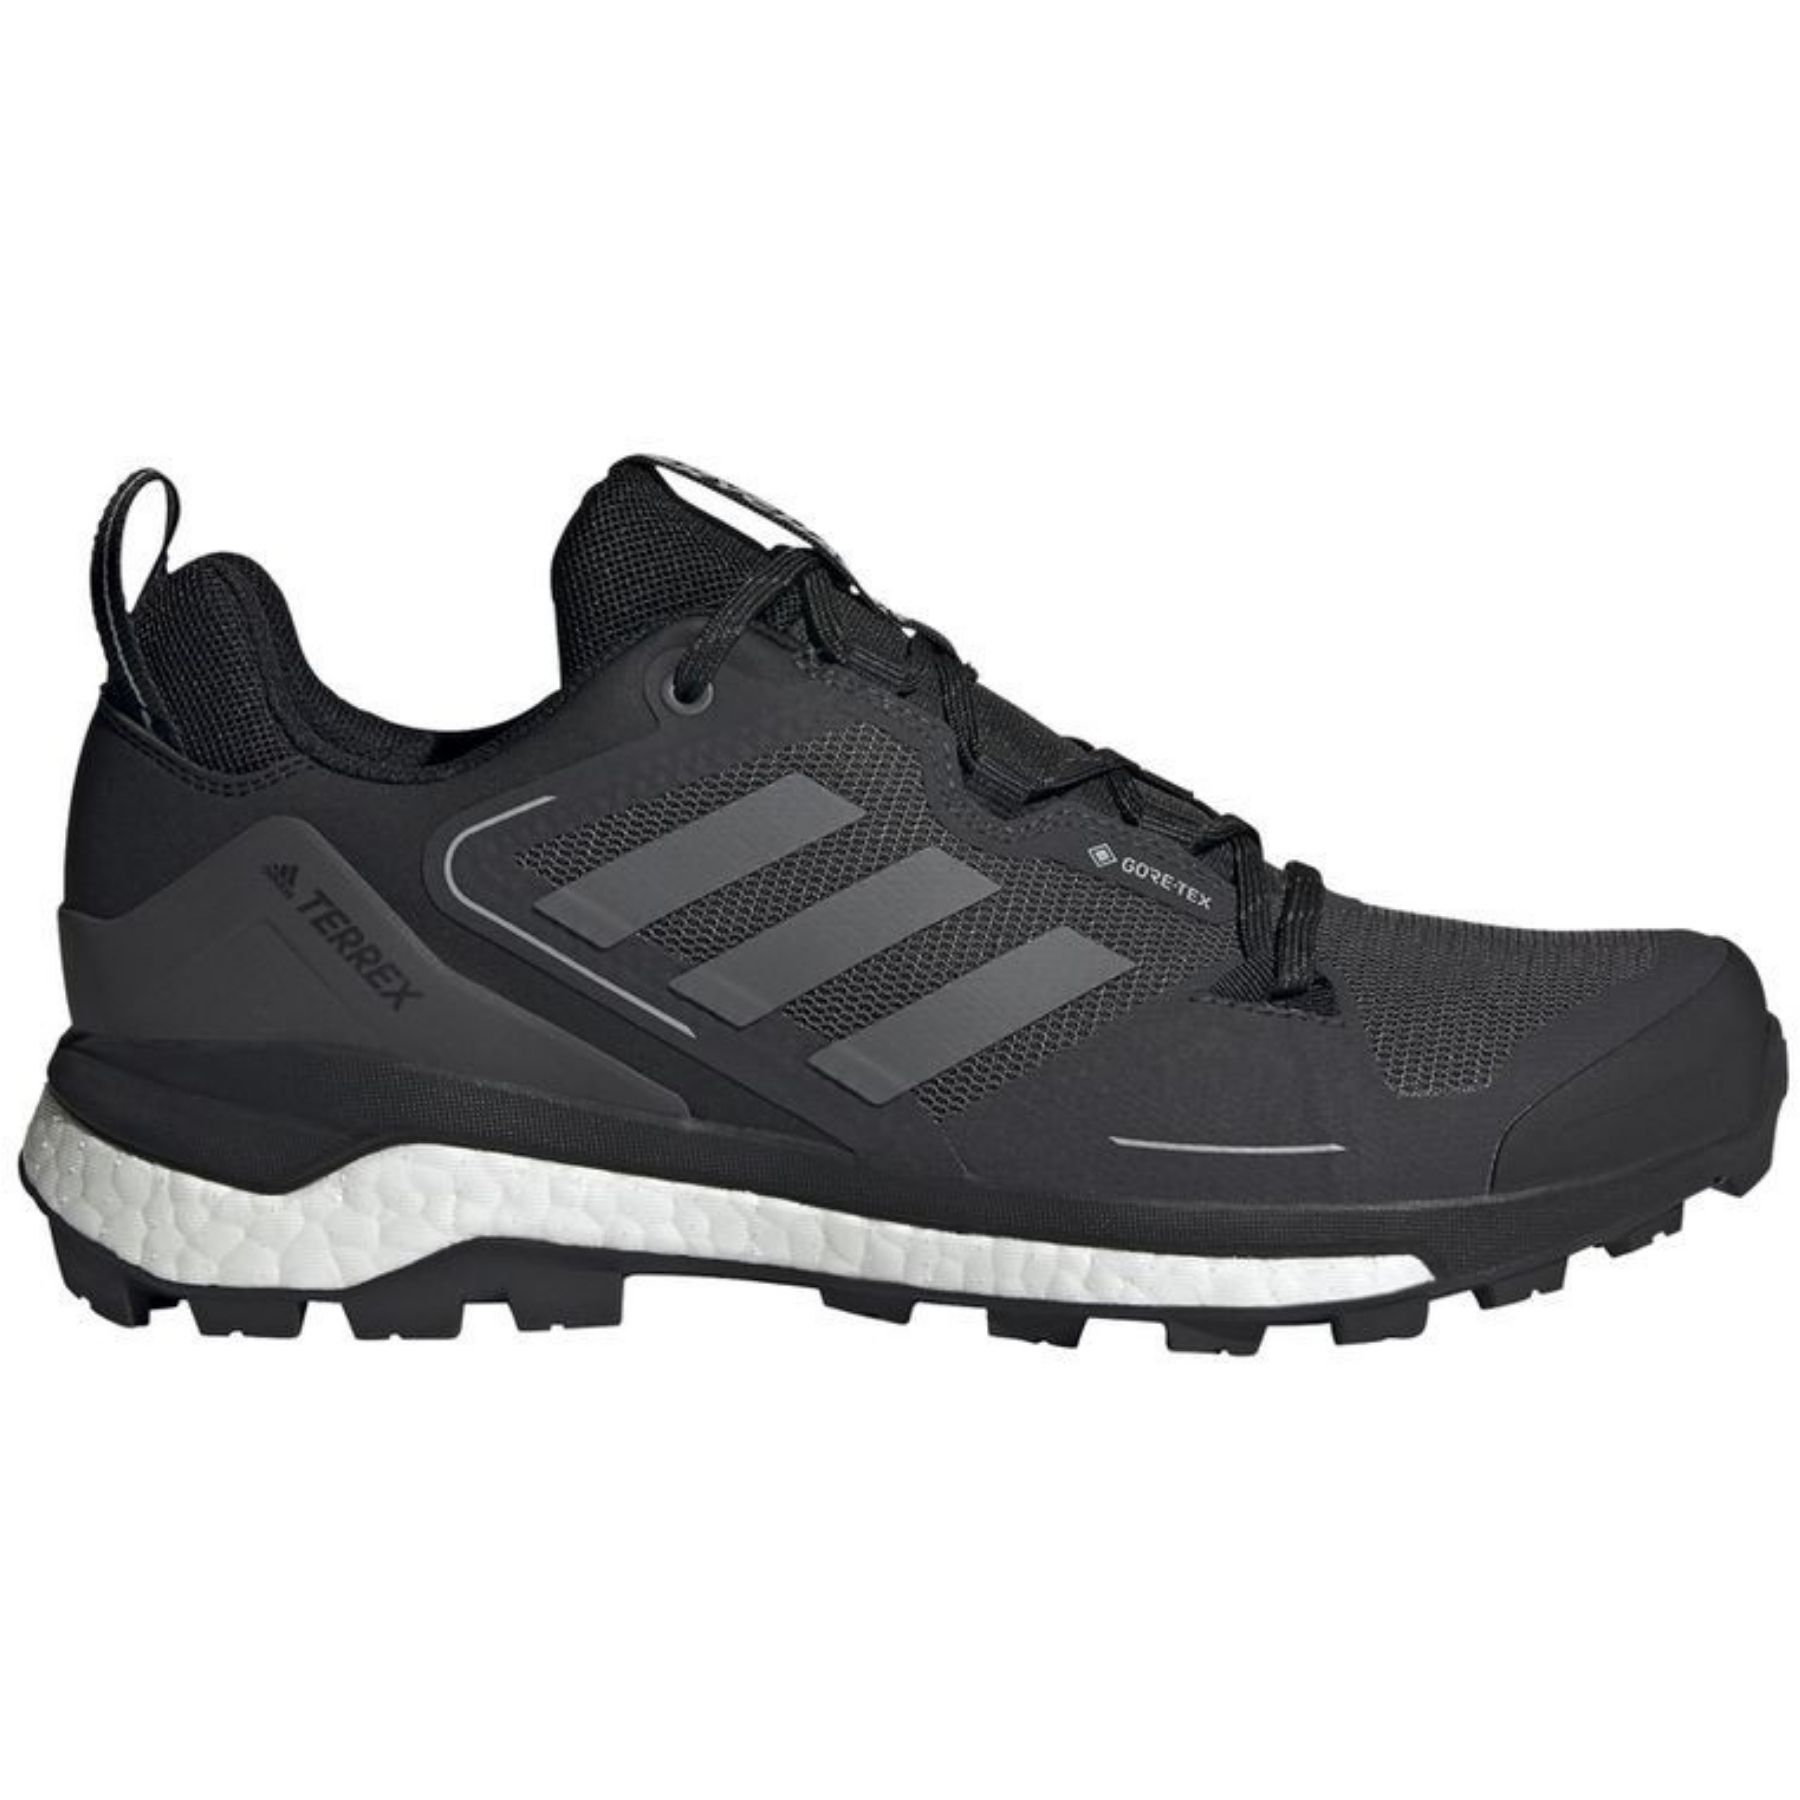 Adidas Terrex Skychaser 2 GTX - Walking shoes - Men's